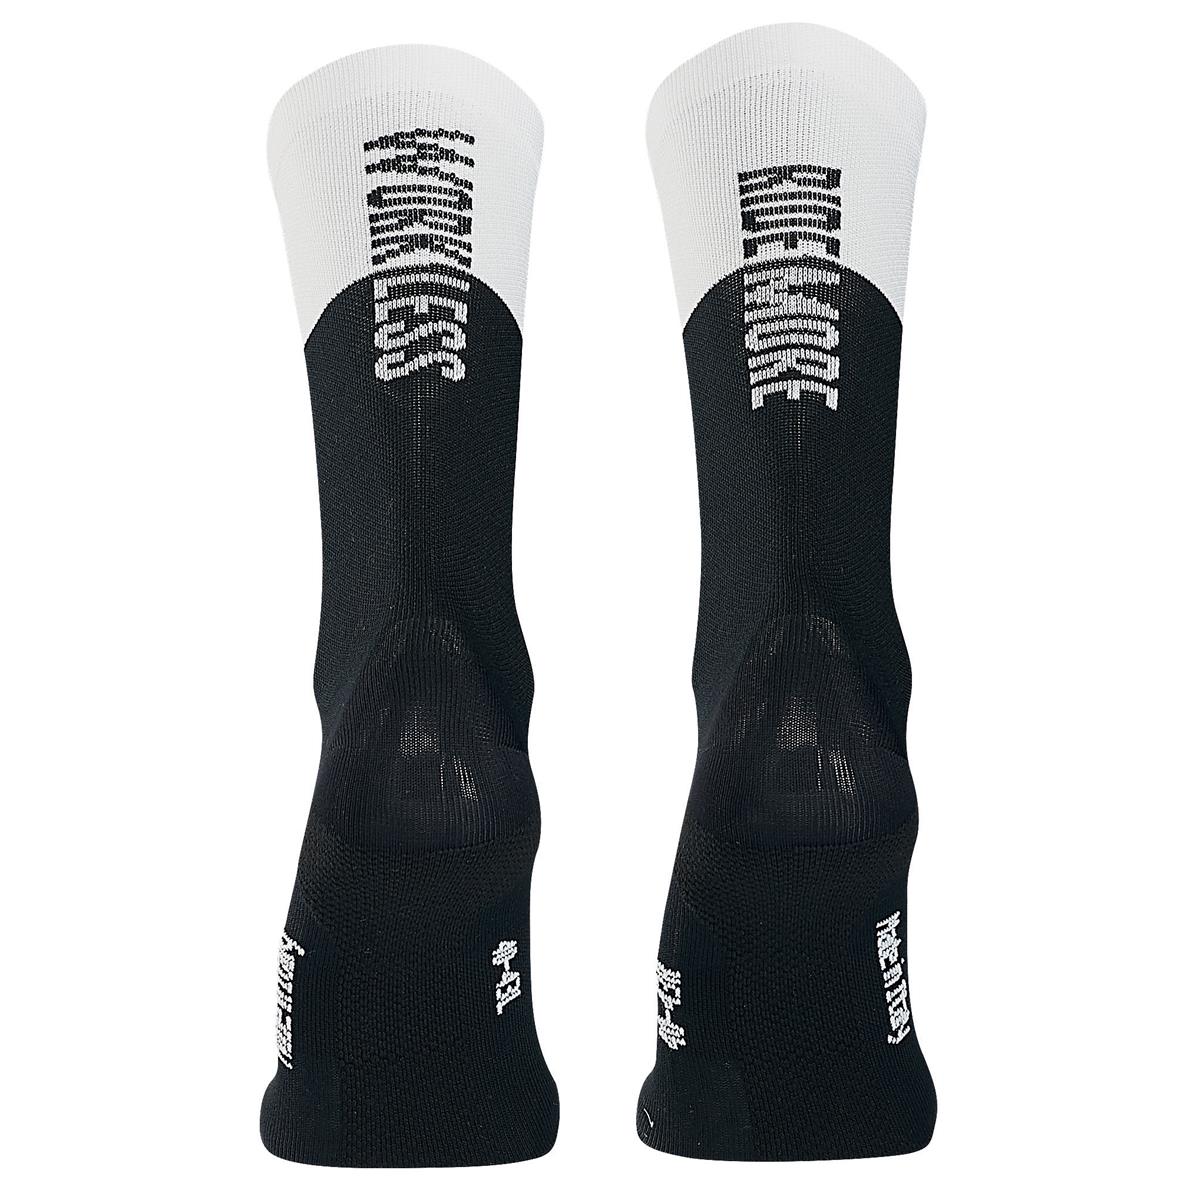 Northwave Socks Work Less Ride More Black/White